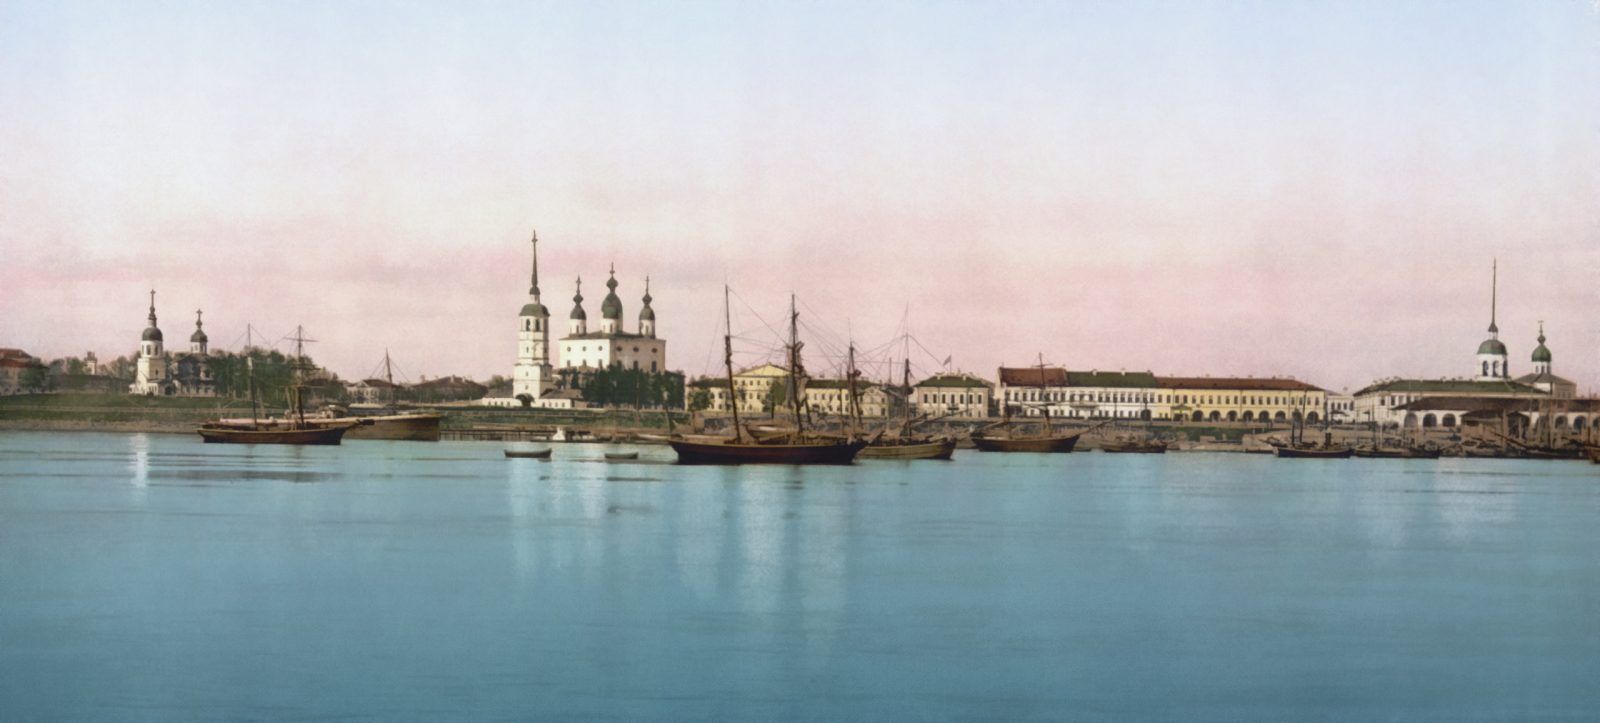 Панорама Архангельска, фотоснимок XIX века